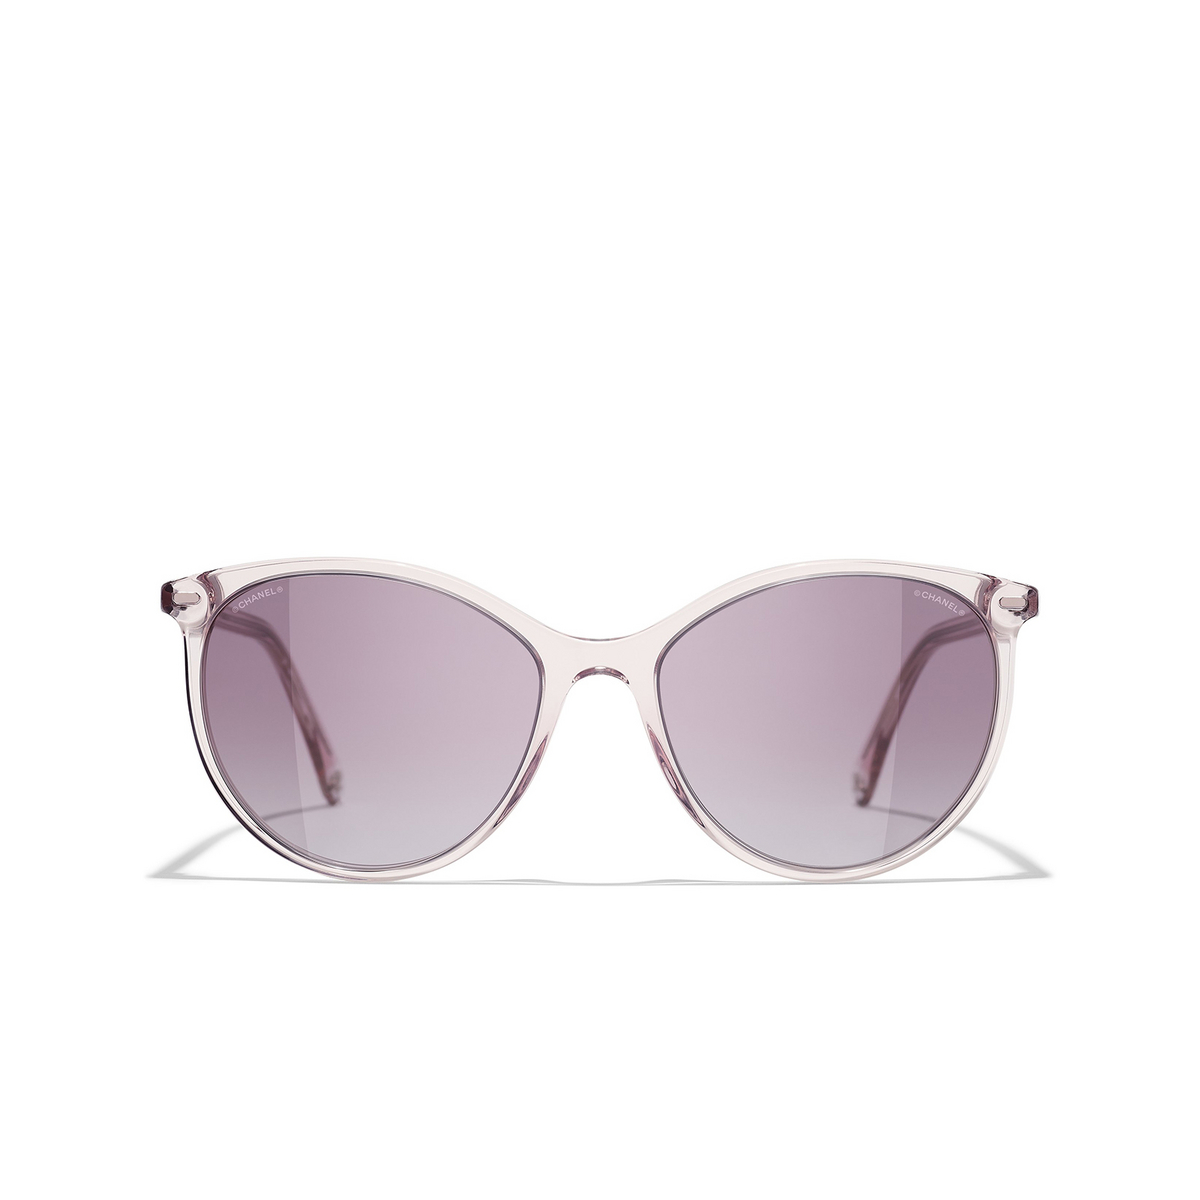 CHANEL pantos Sunglasses C561S1 Transparent pink - front view